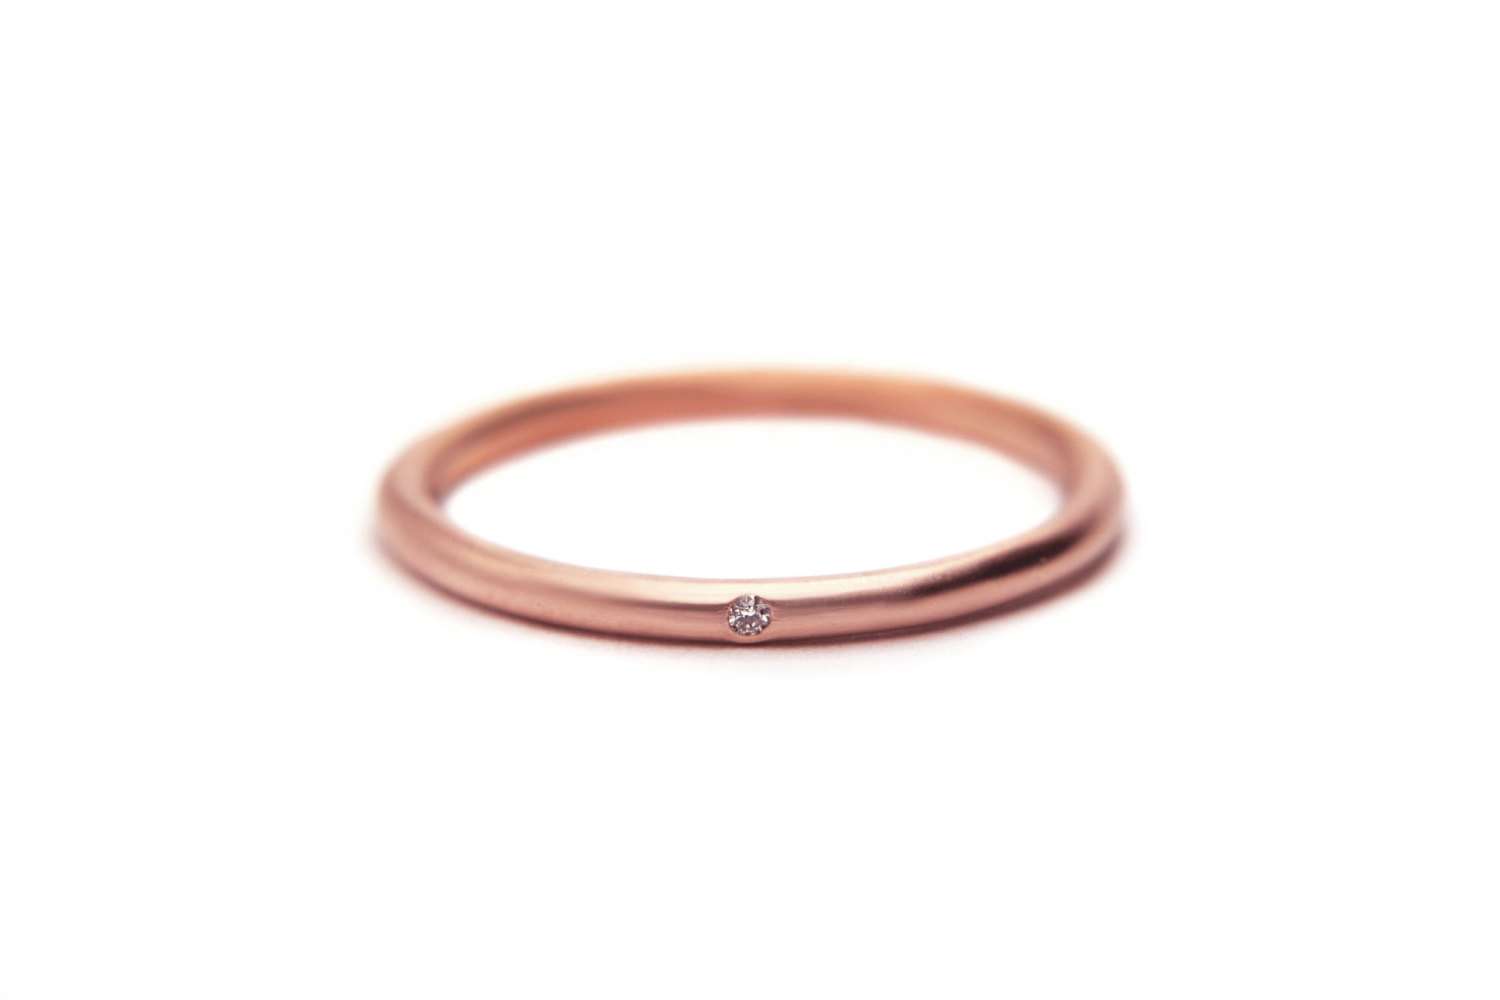 Rose gold diamond ring, thin delicate stacking 14k gold ring